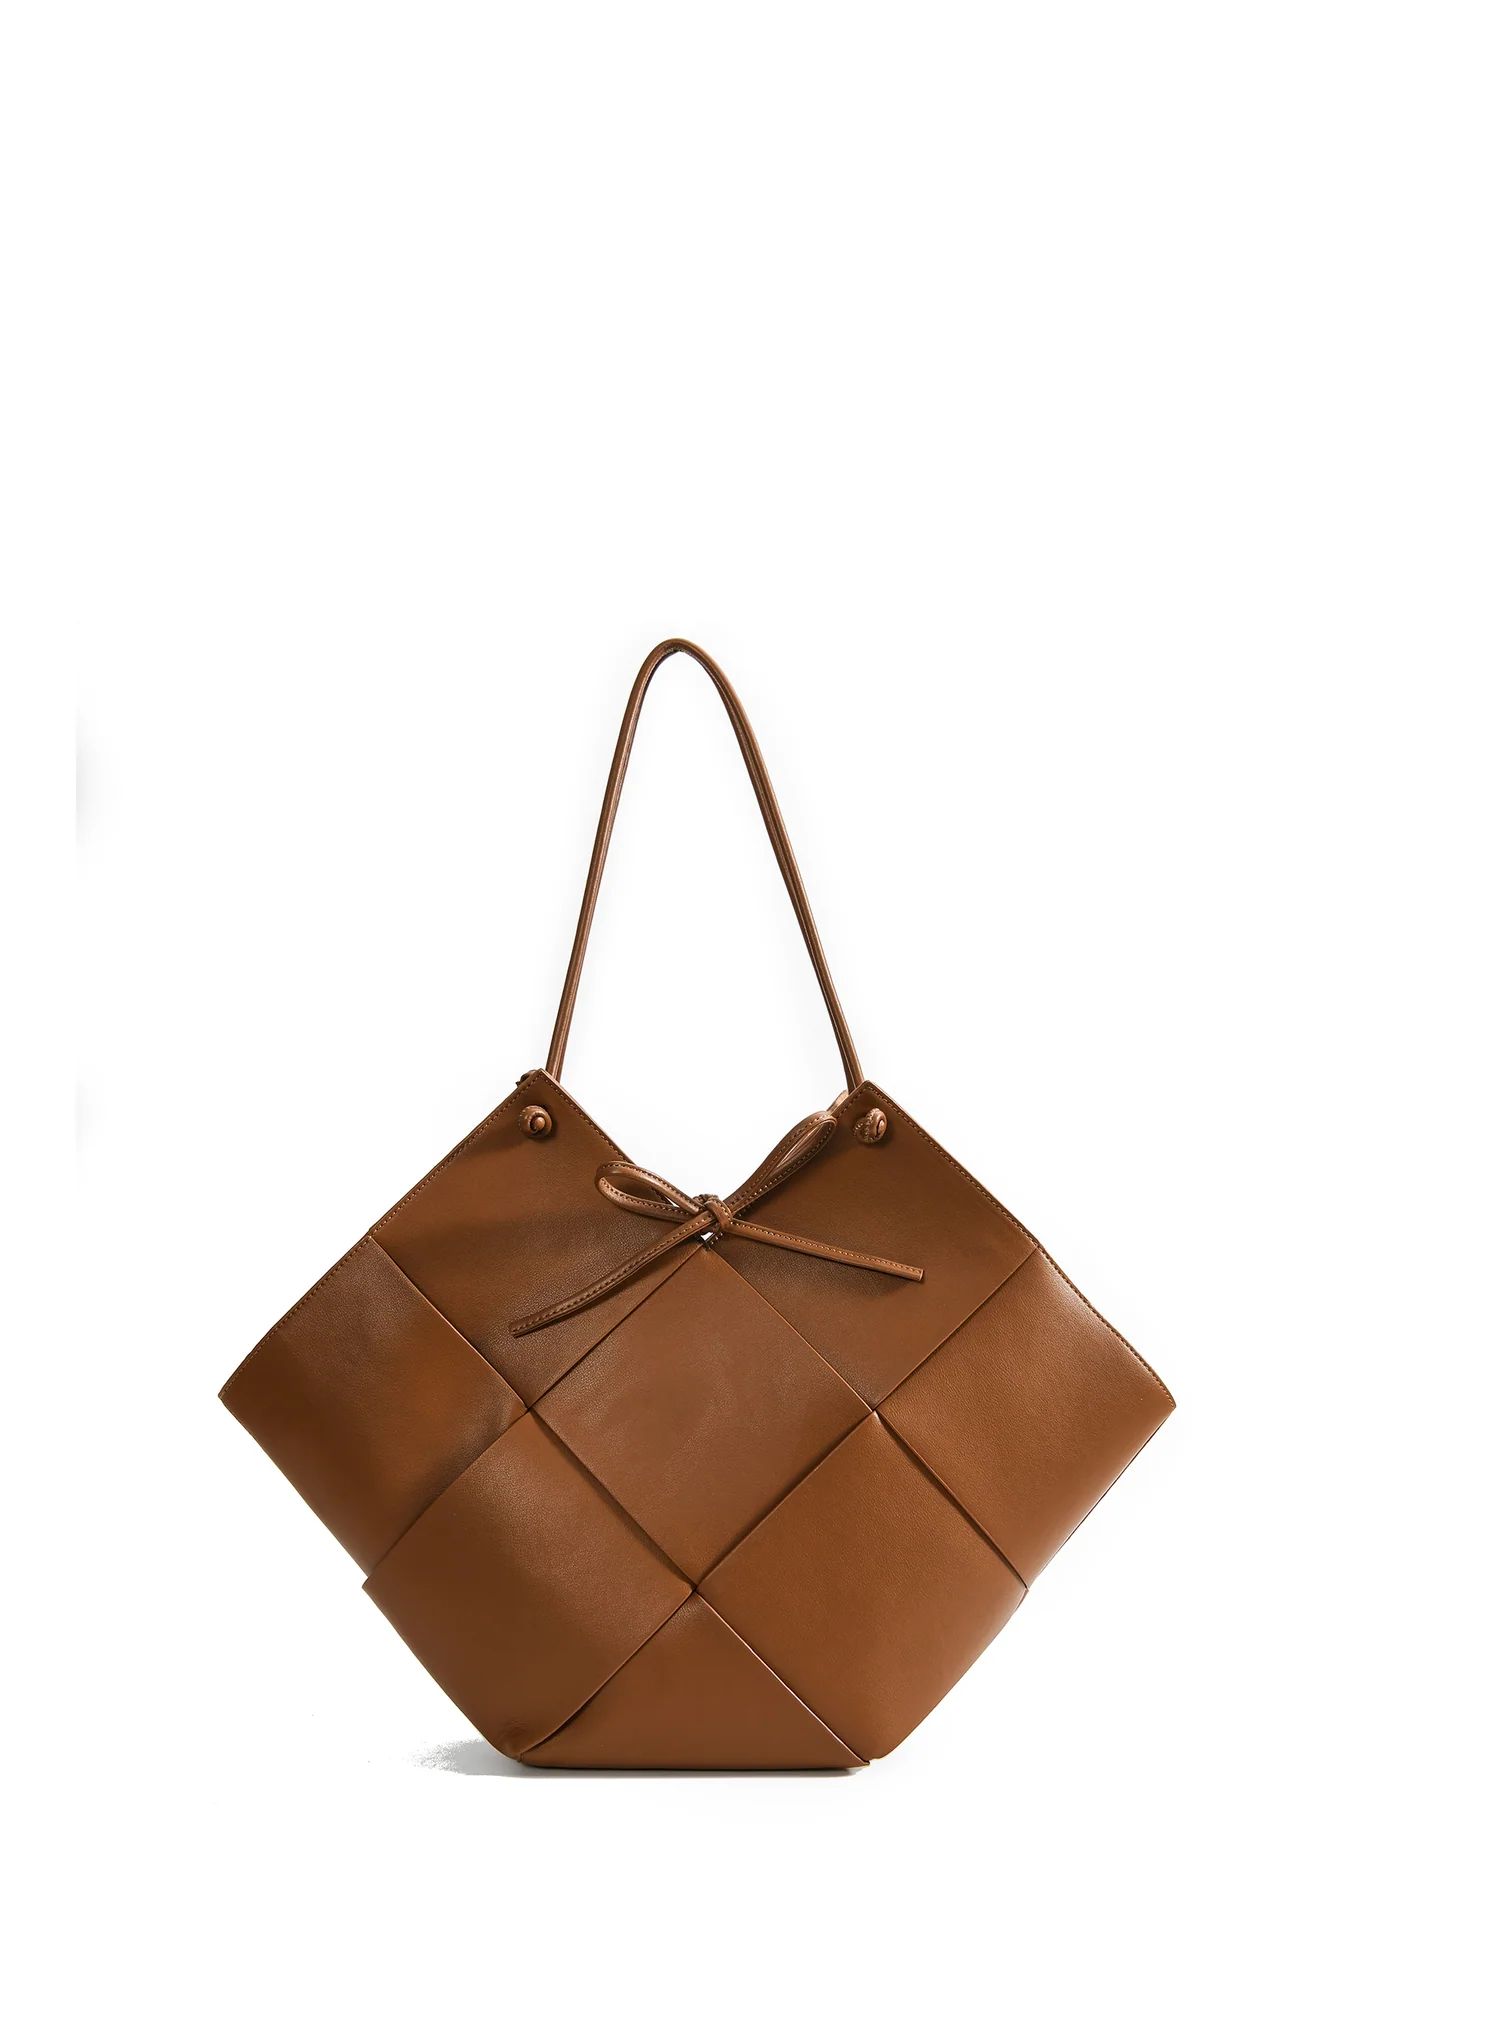 Taylor Contexture Leather Bag, Caramel | Bob Ore Blue Collection